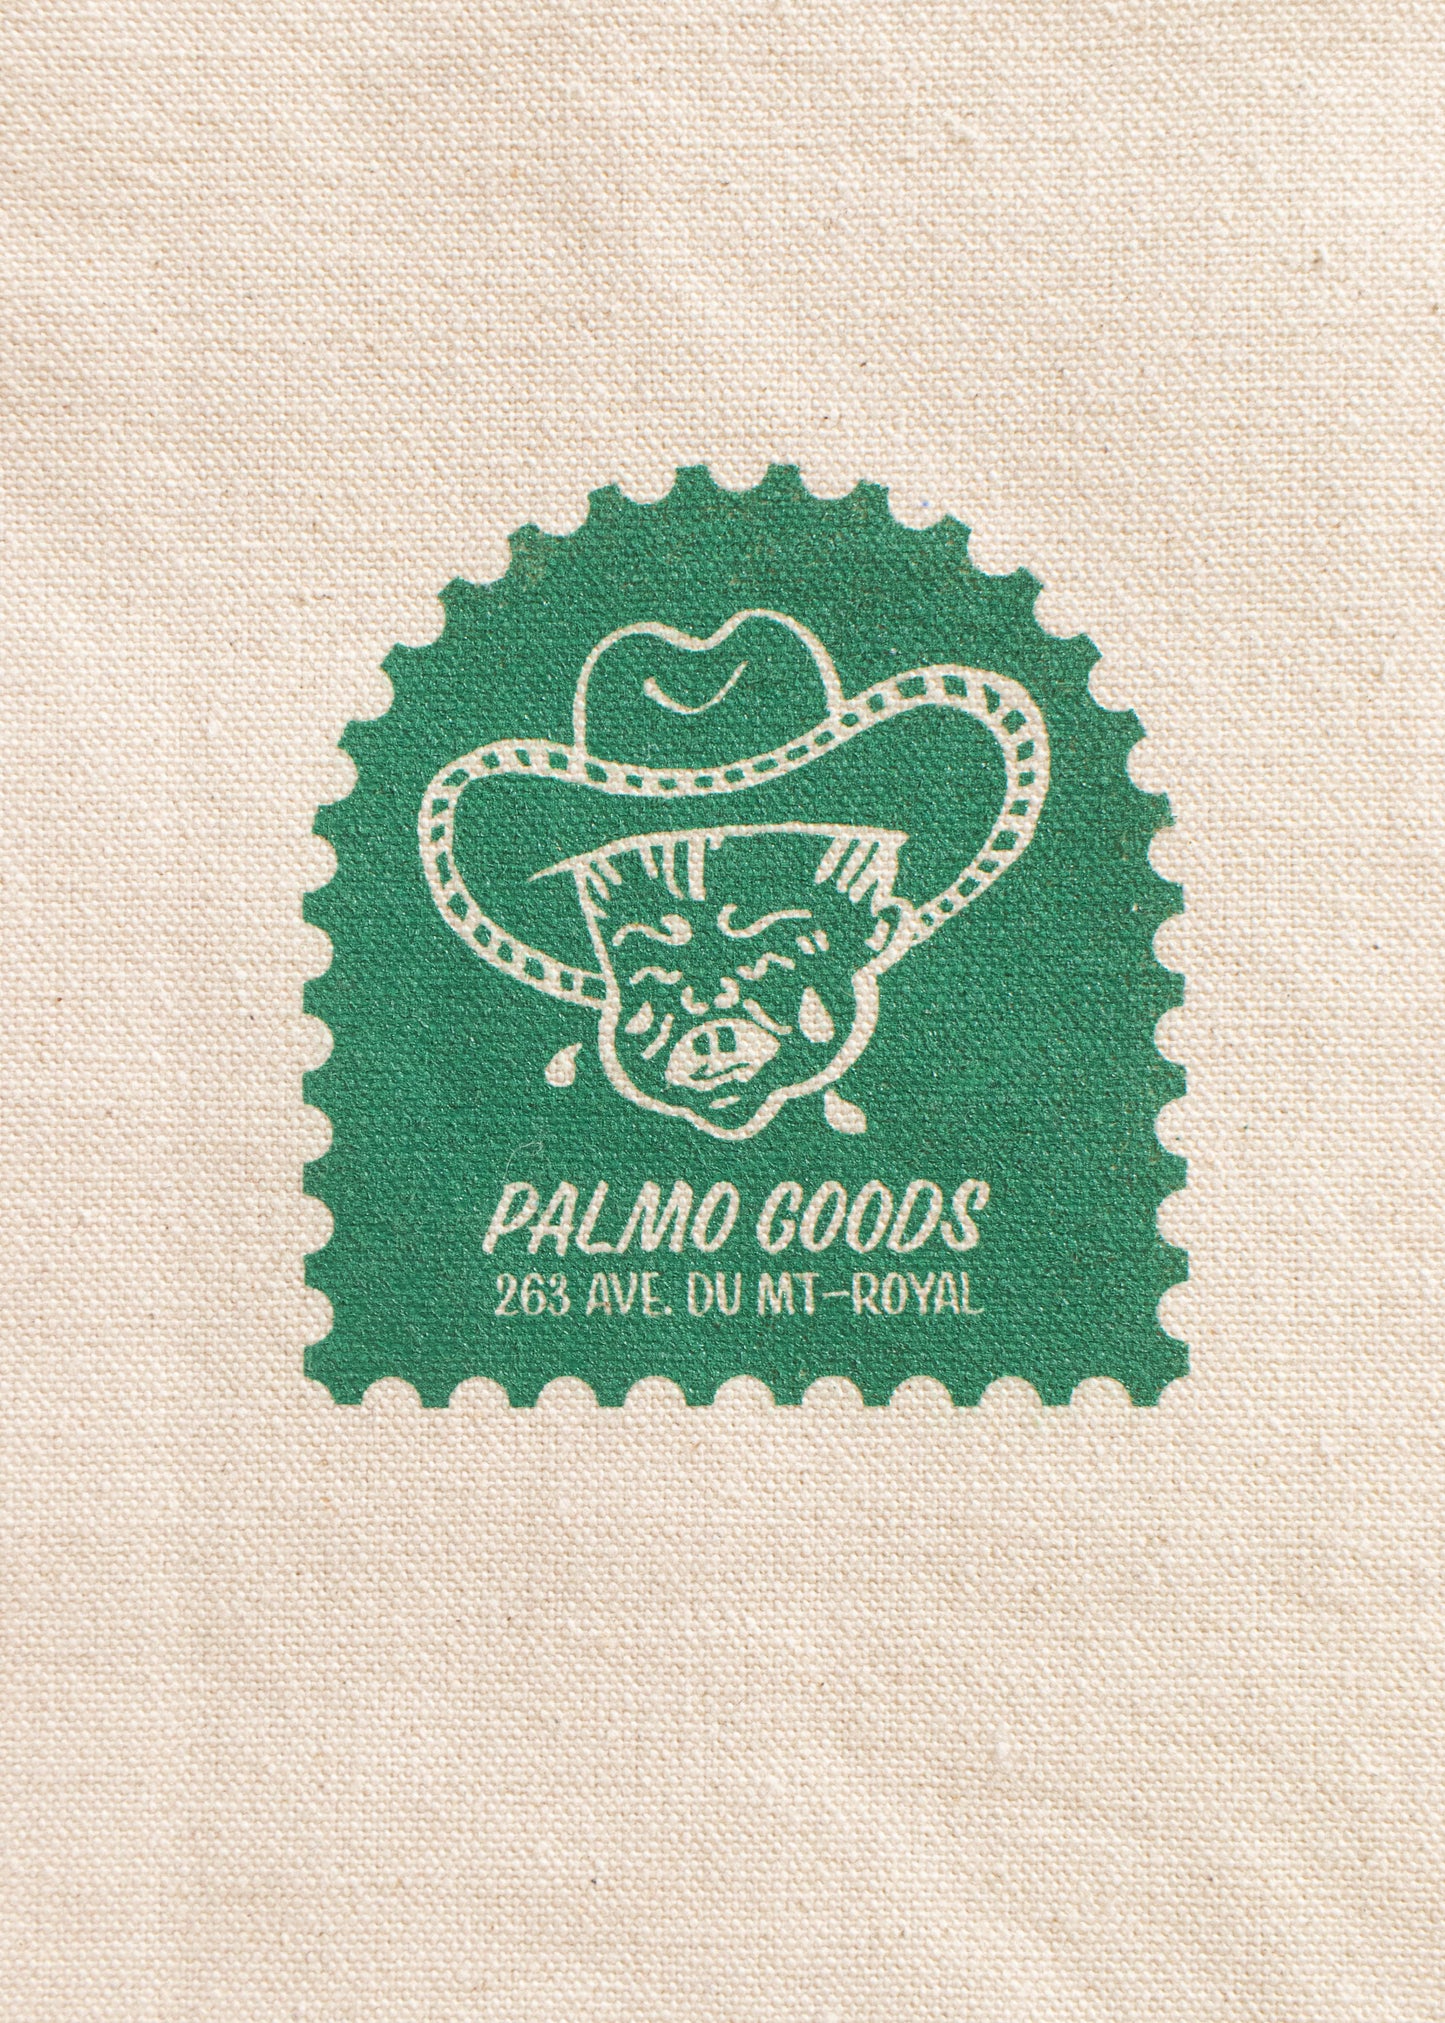 Palmo Goods Montréal Souvenir Messenger Bag